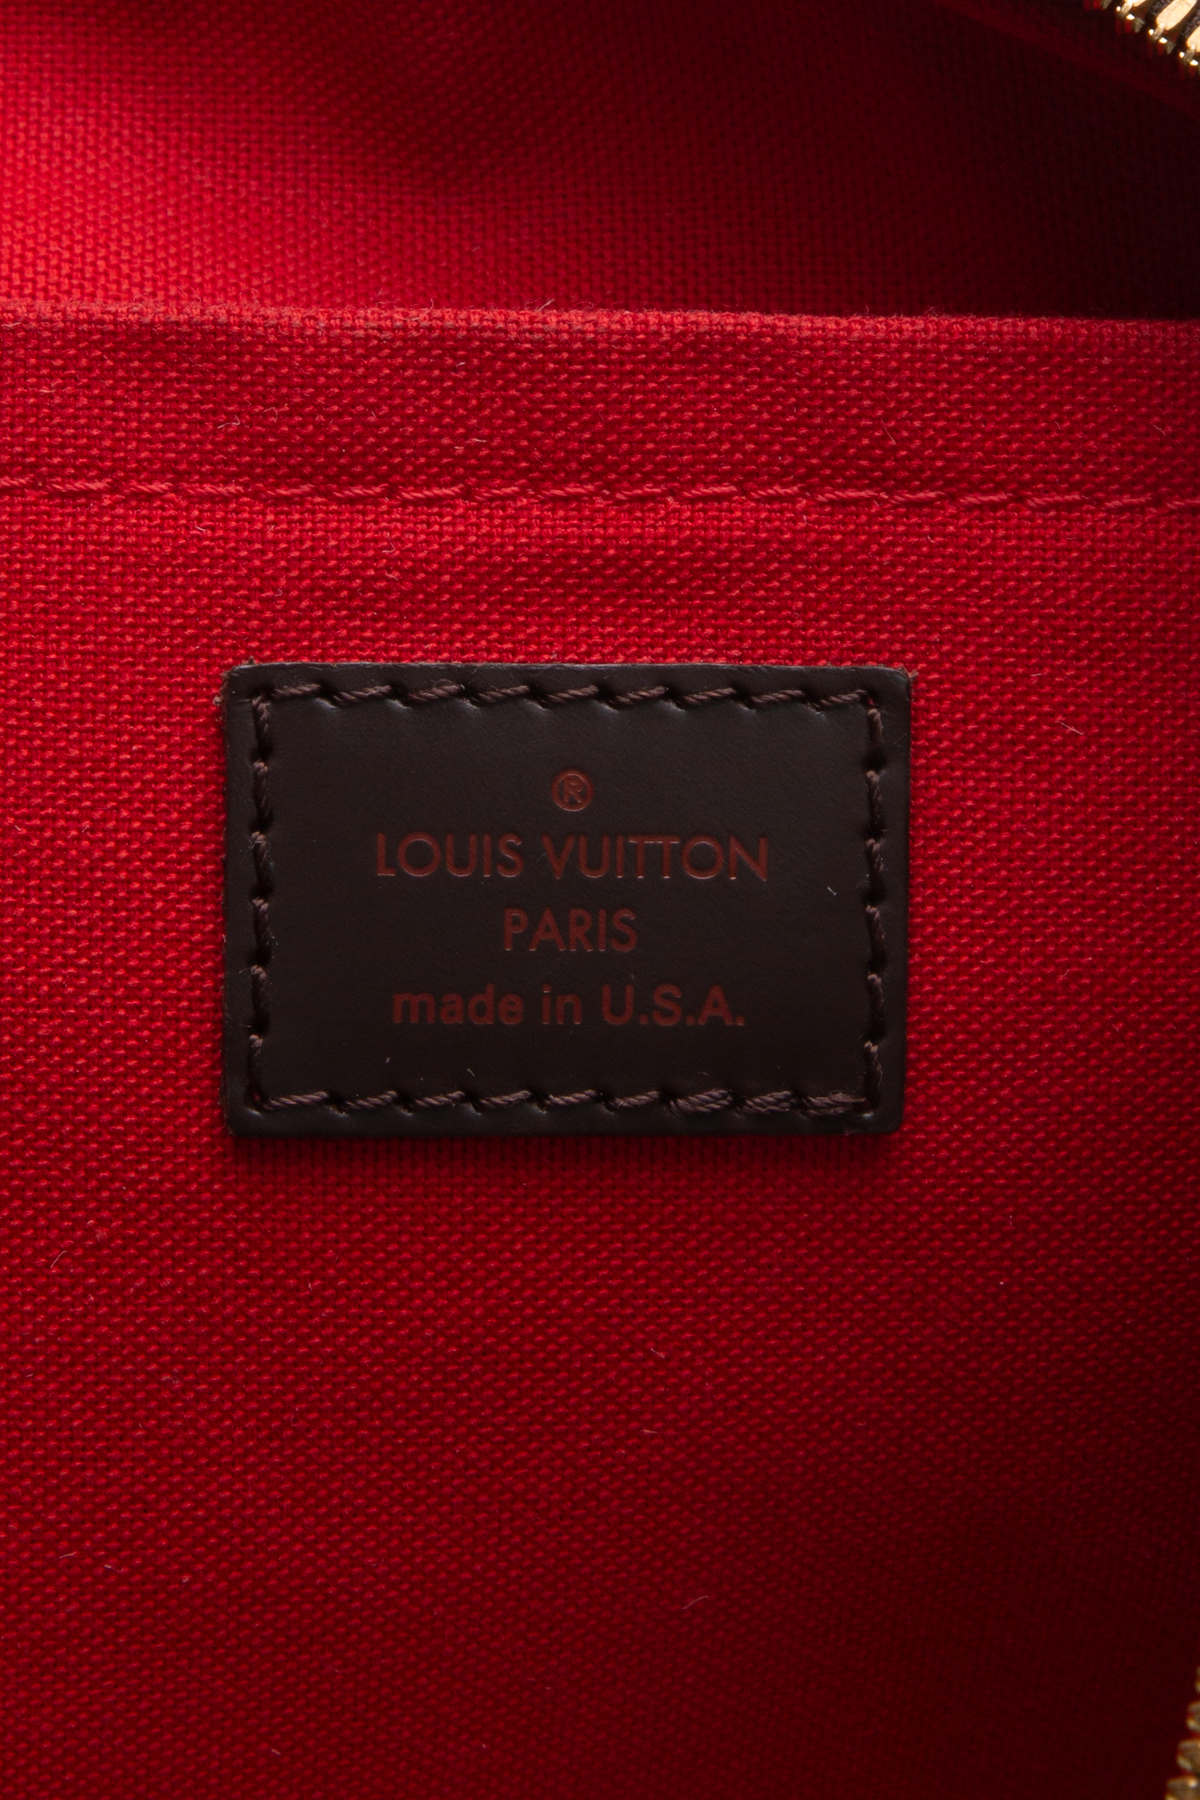 Louis Vuitton Authenticity Codes Denmark, SAVE 35% 